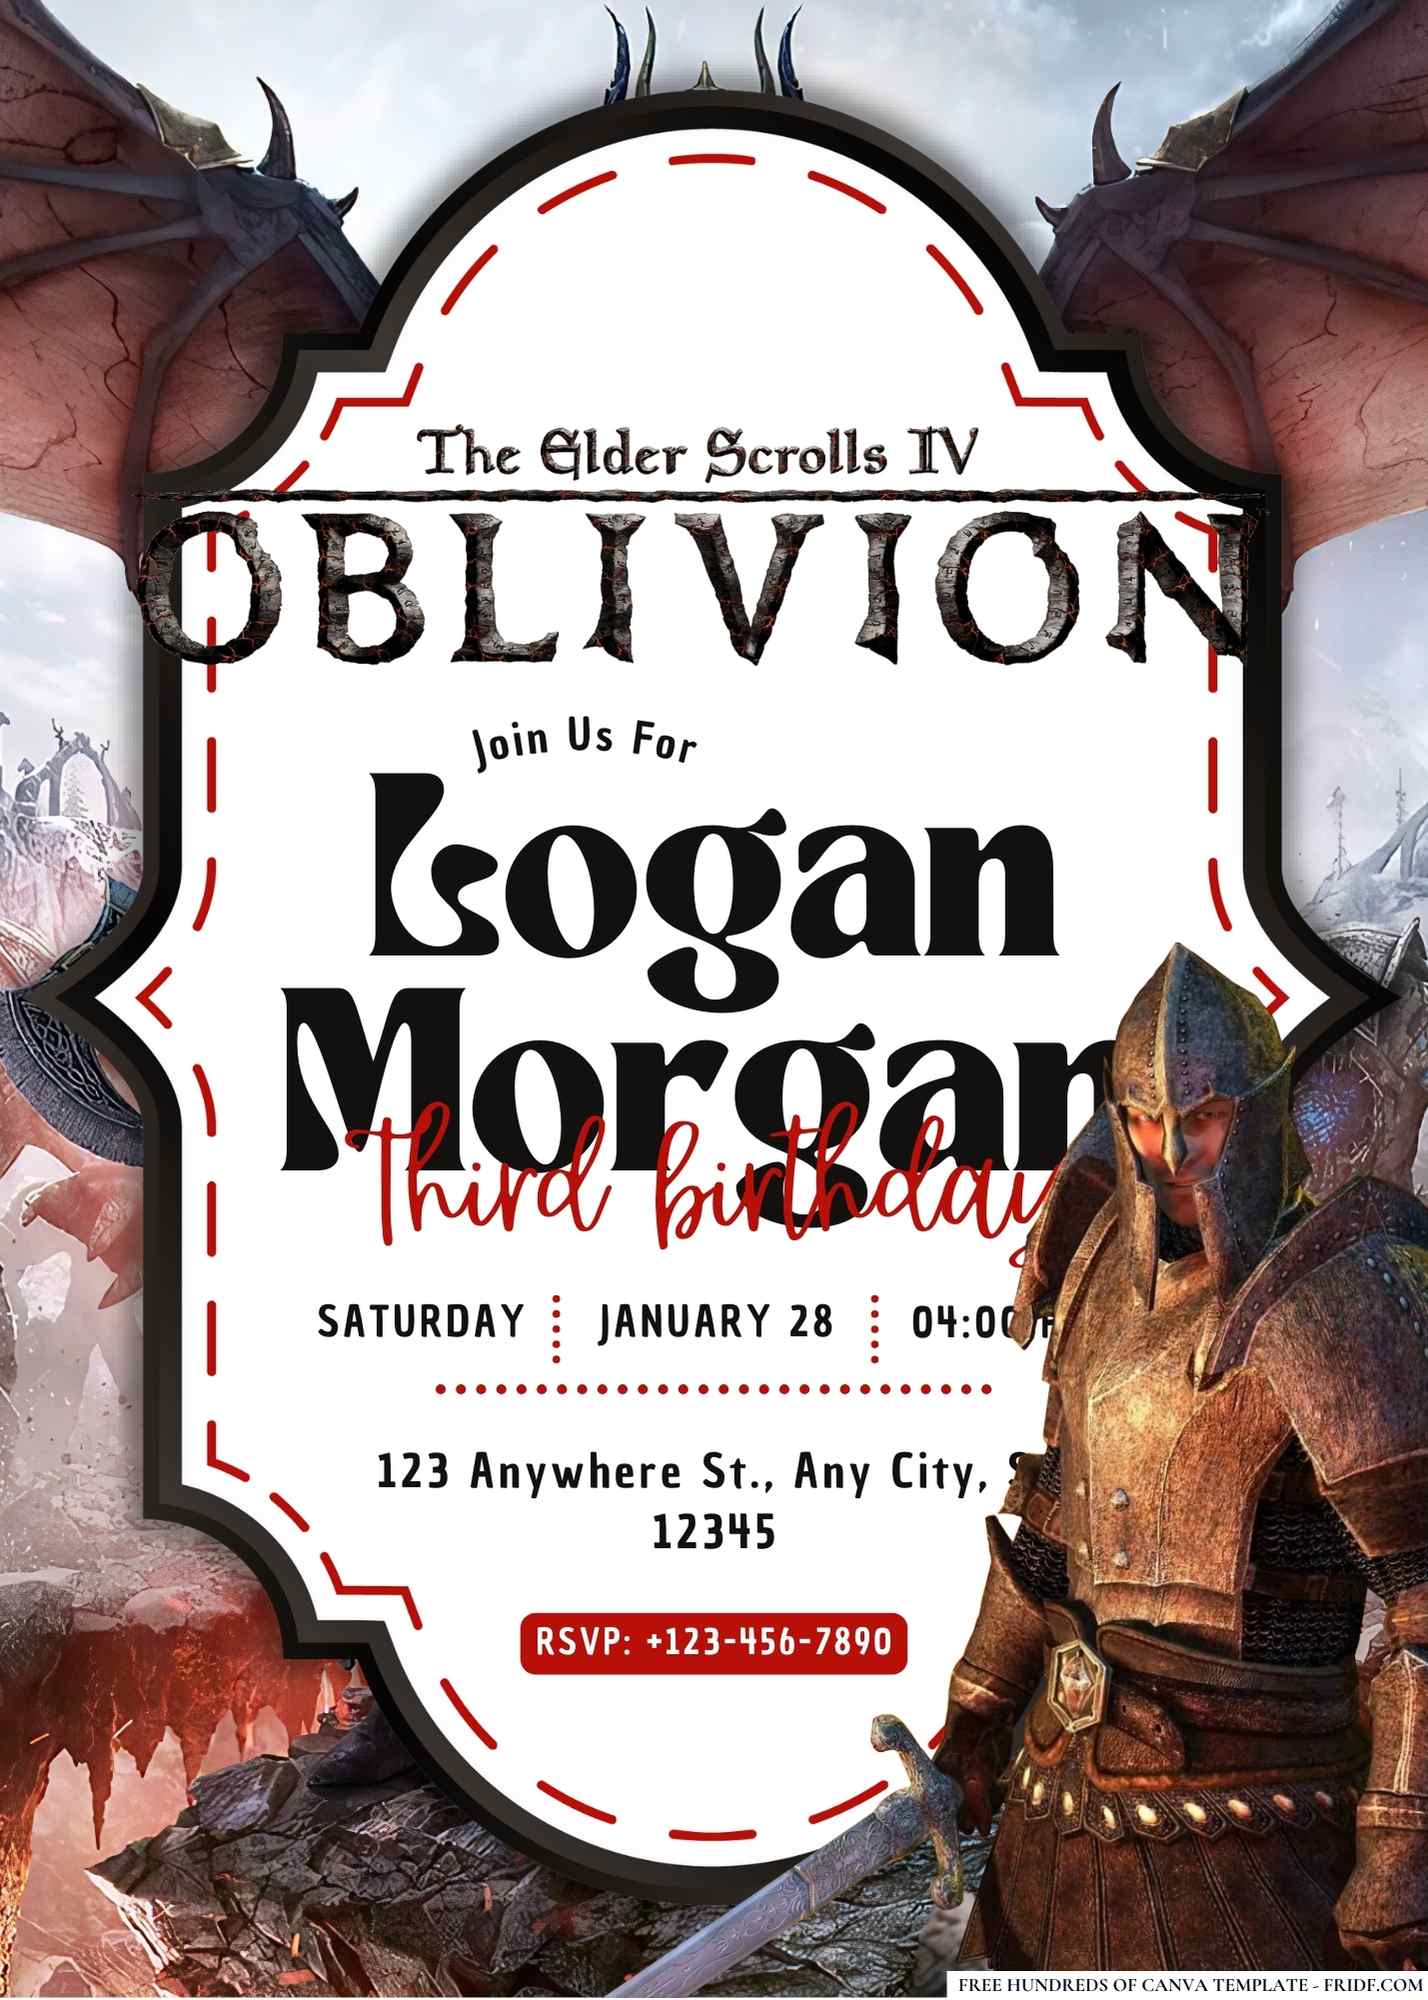 FREE Editable The Elder Scrolls IV Oblivion Birthday Invitation